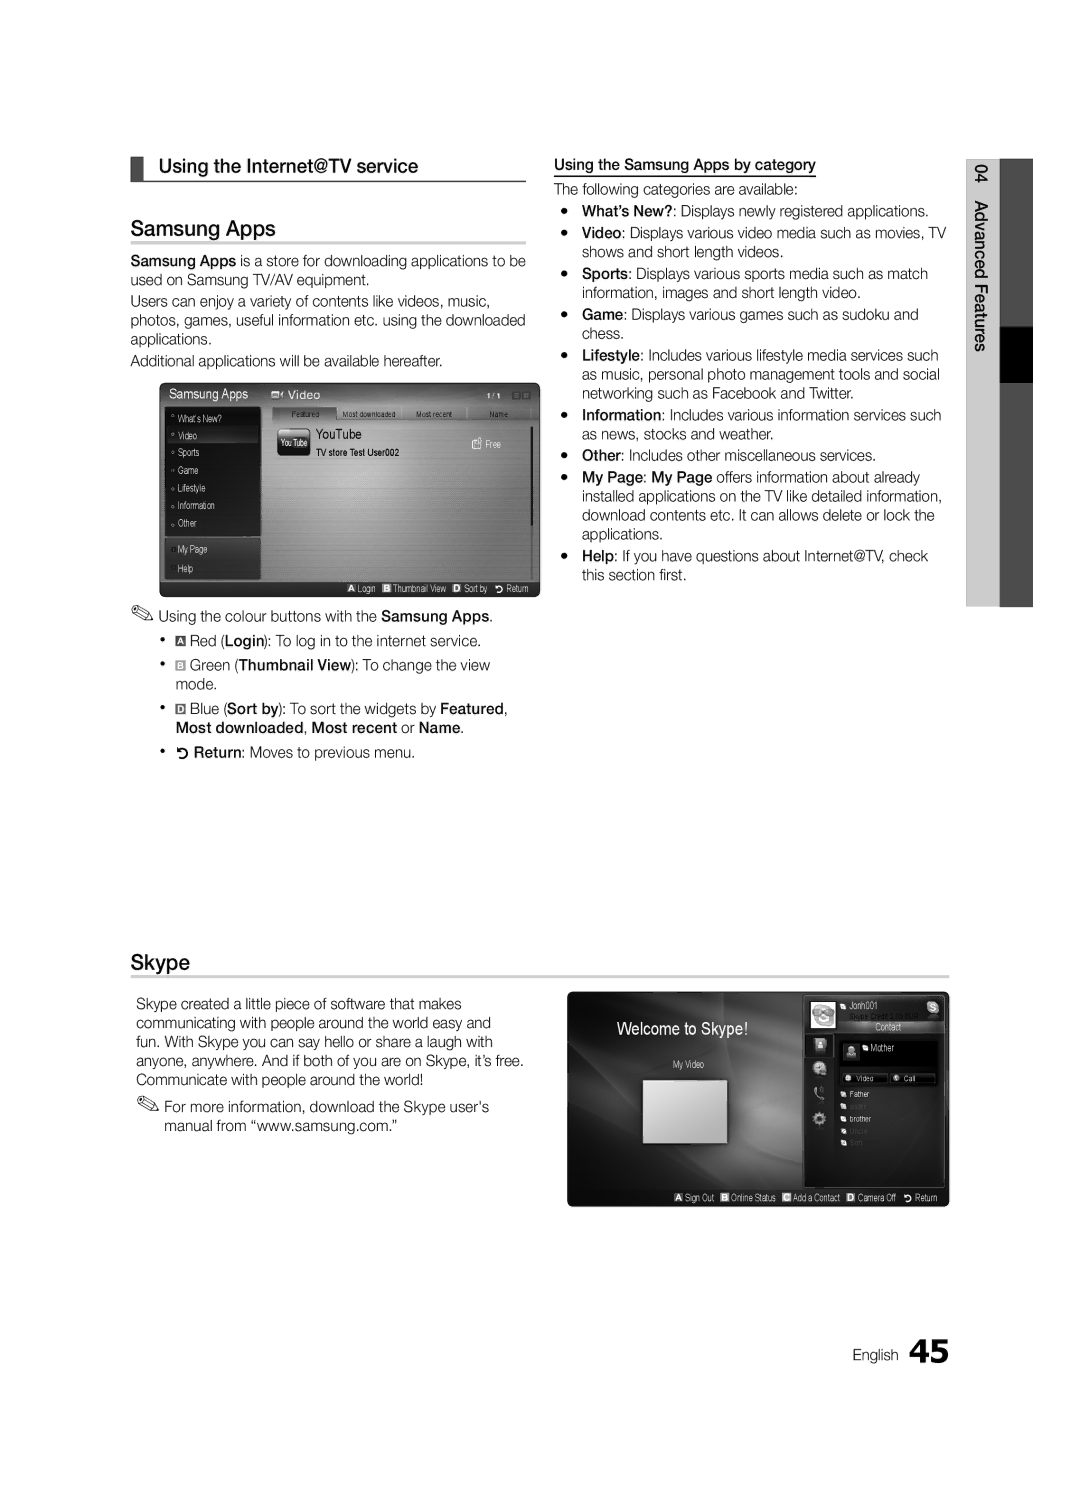 Samsung UA40C7000WRXHC manual Samsung Apps, Skype, Using the Internet@TV service, Xx RReturn Moves to previous menu 